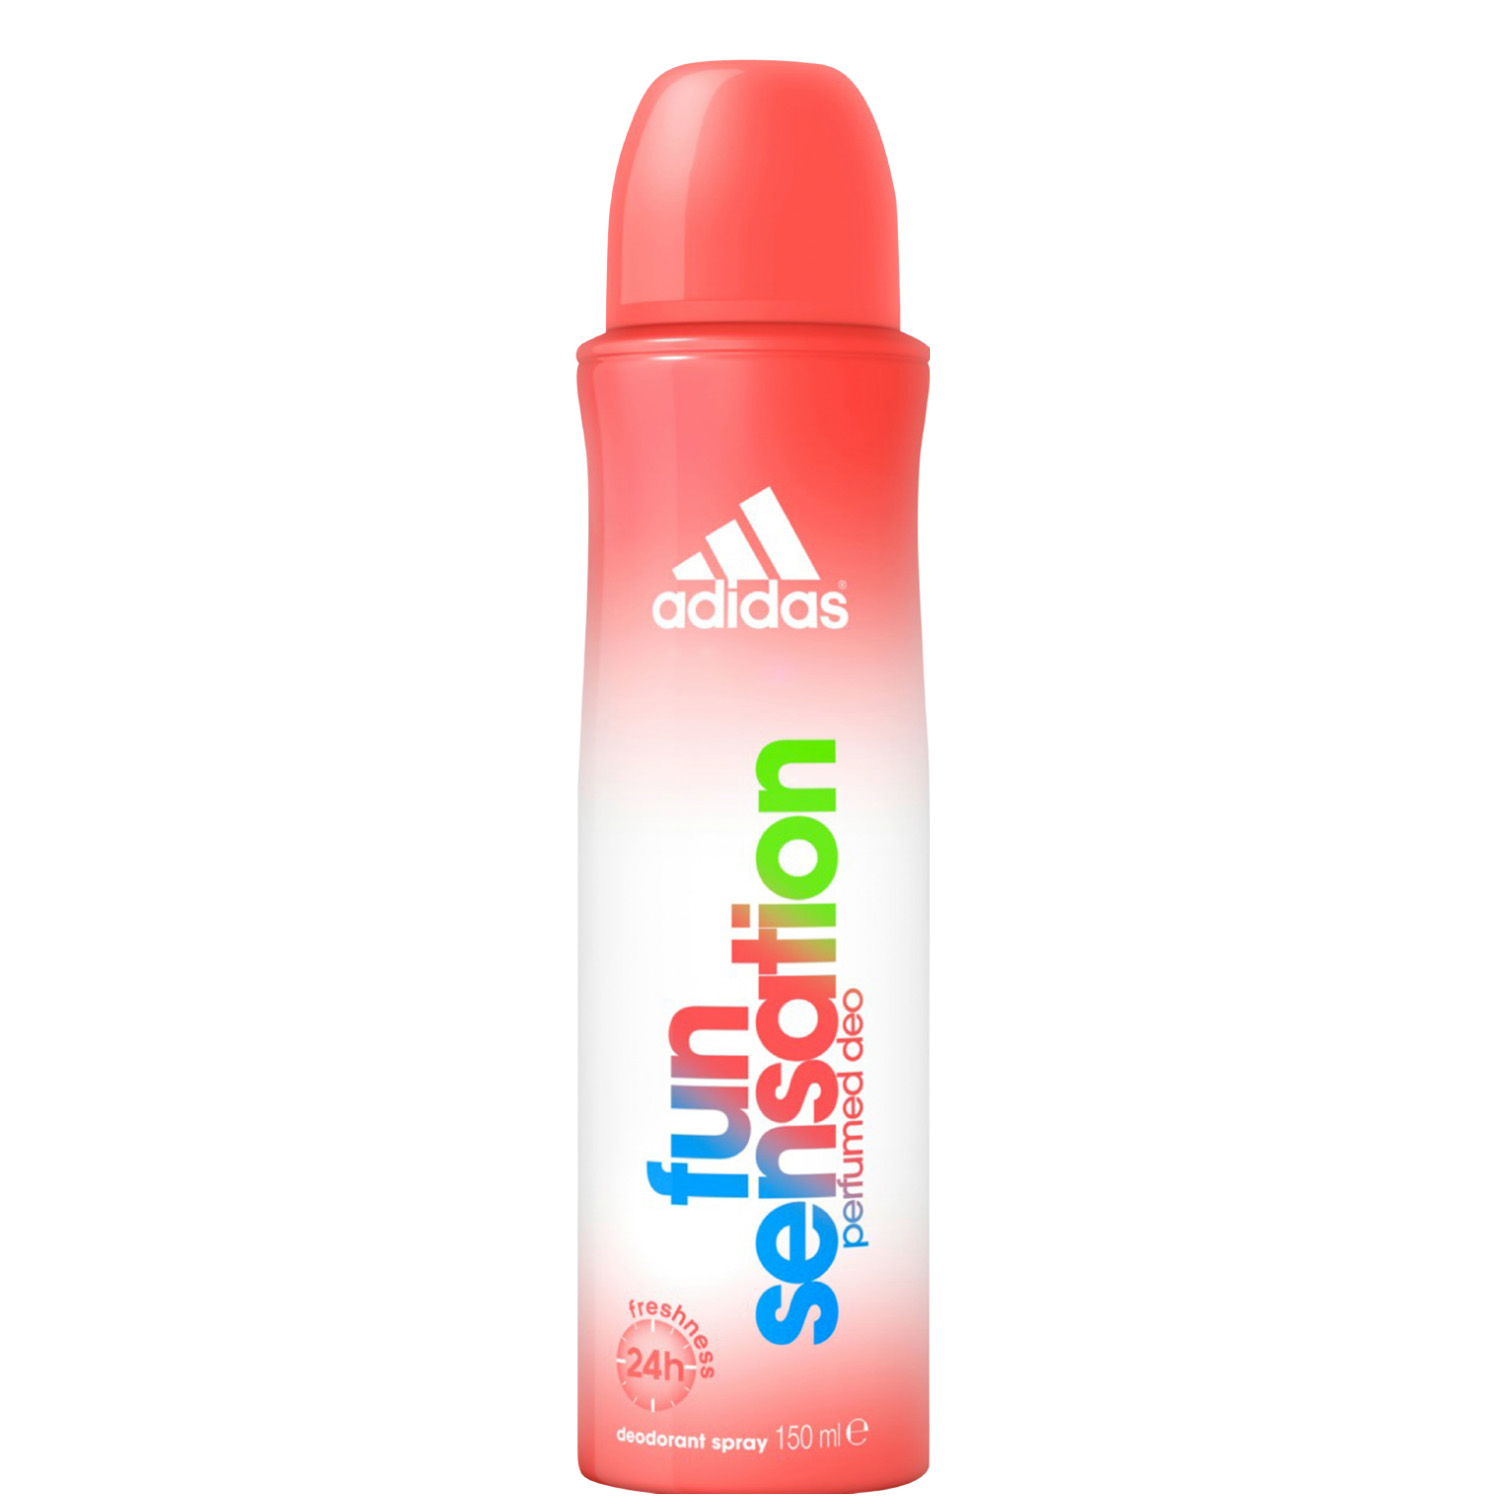 Adidas for Women Fun Sensation Deodorant Spray 150ml